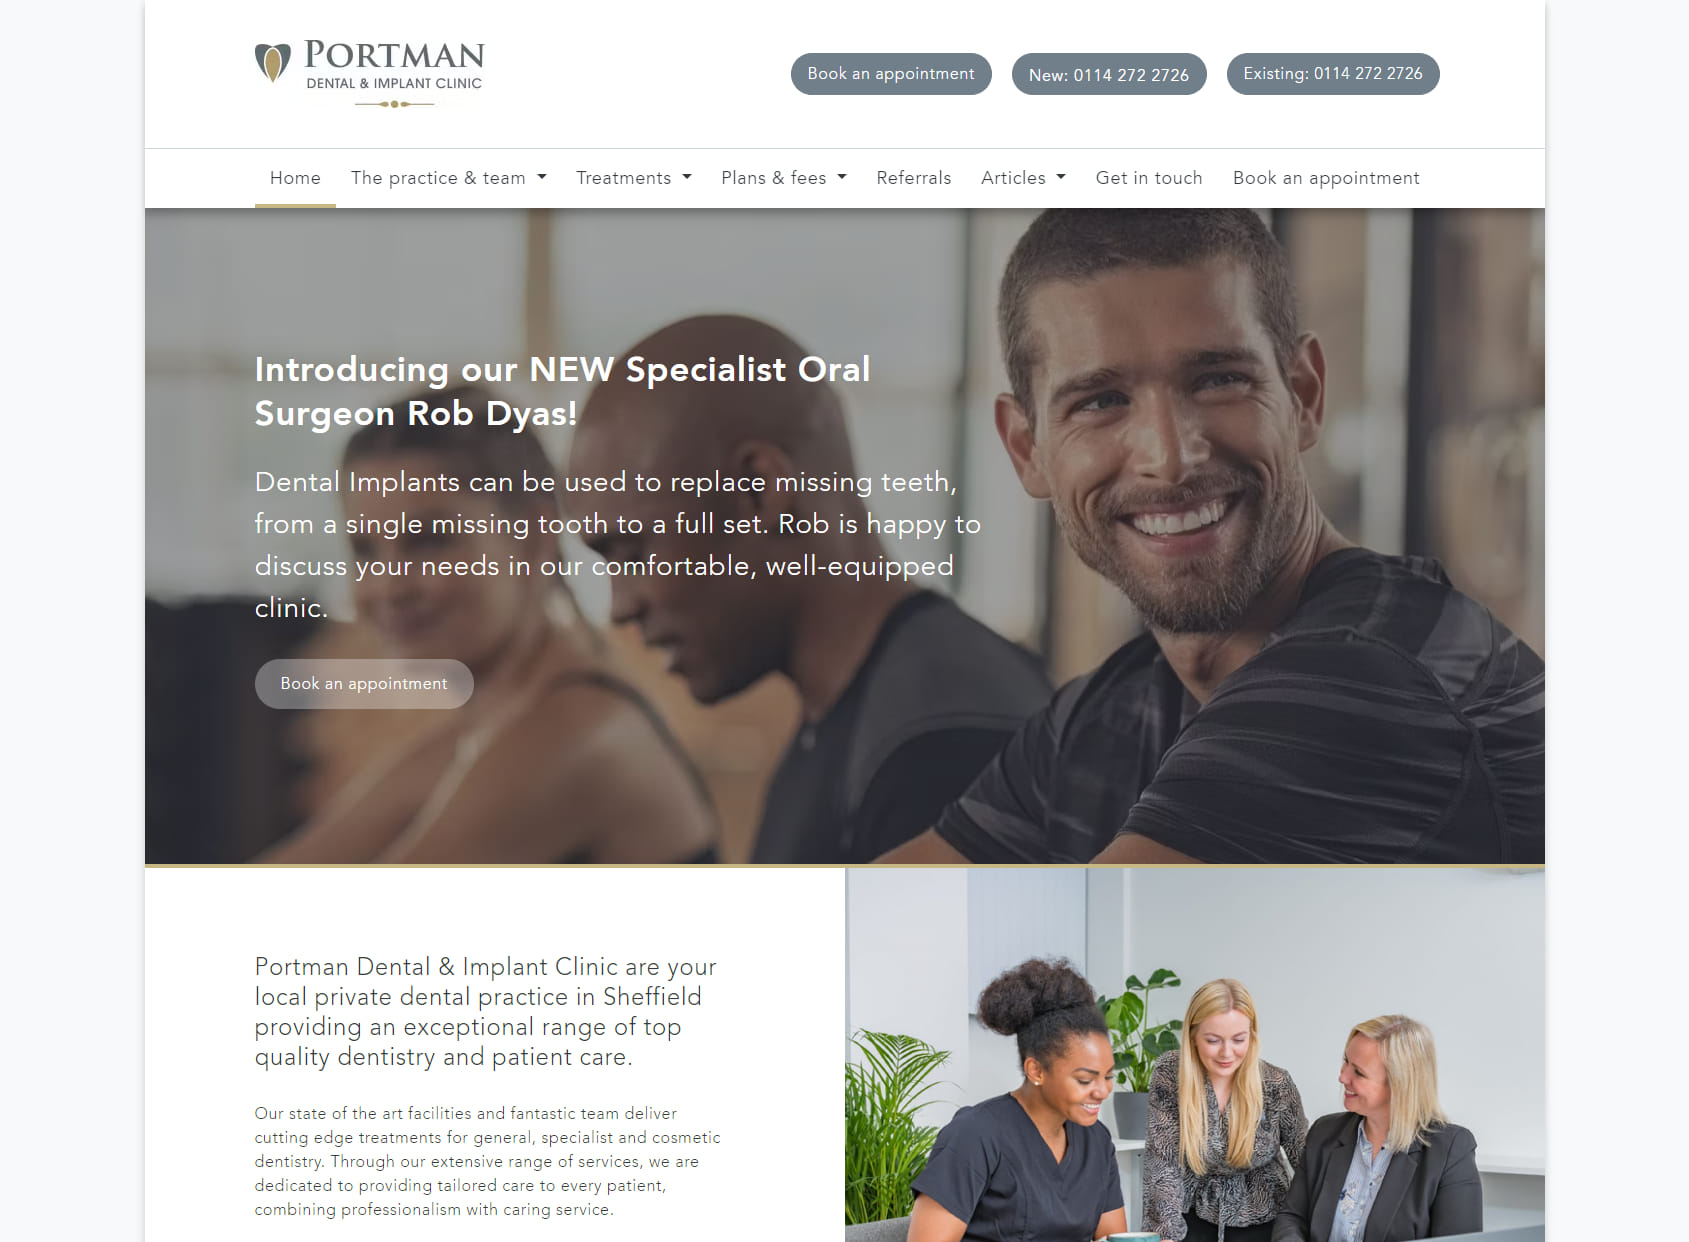 Portman Dental & Implant Clinic